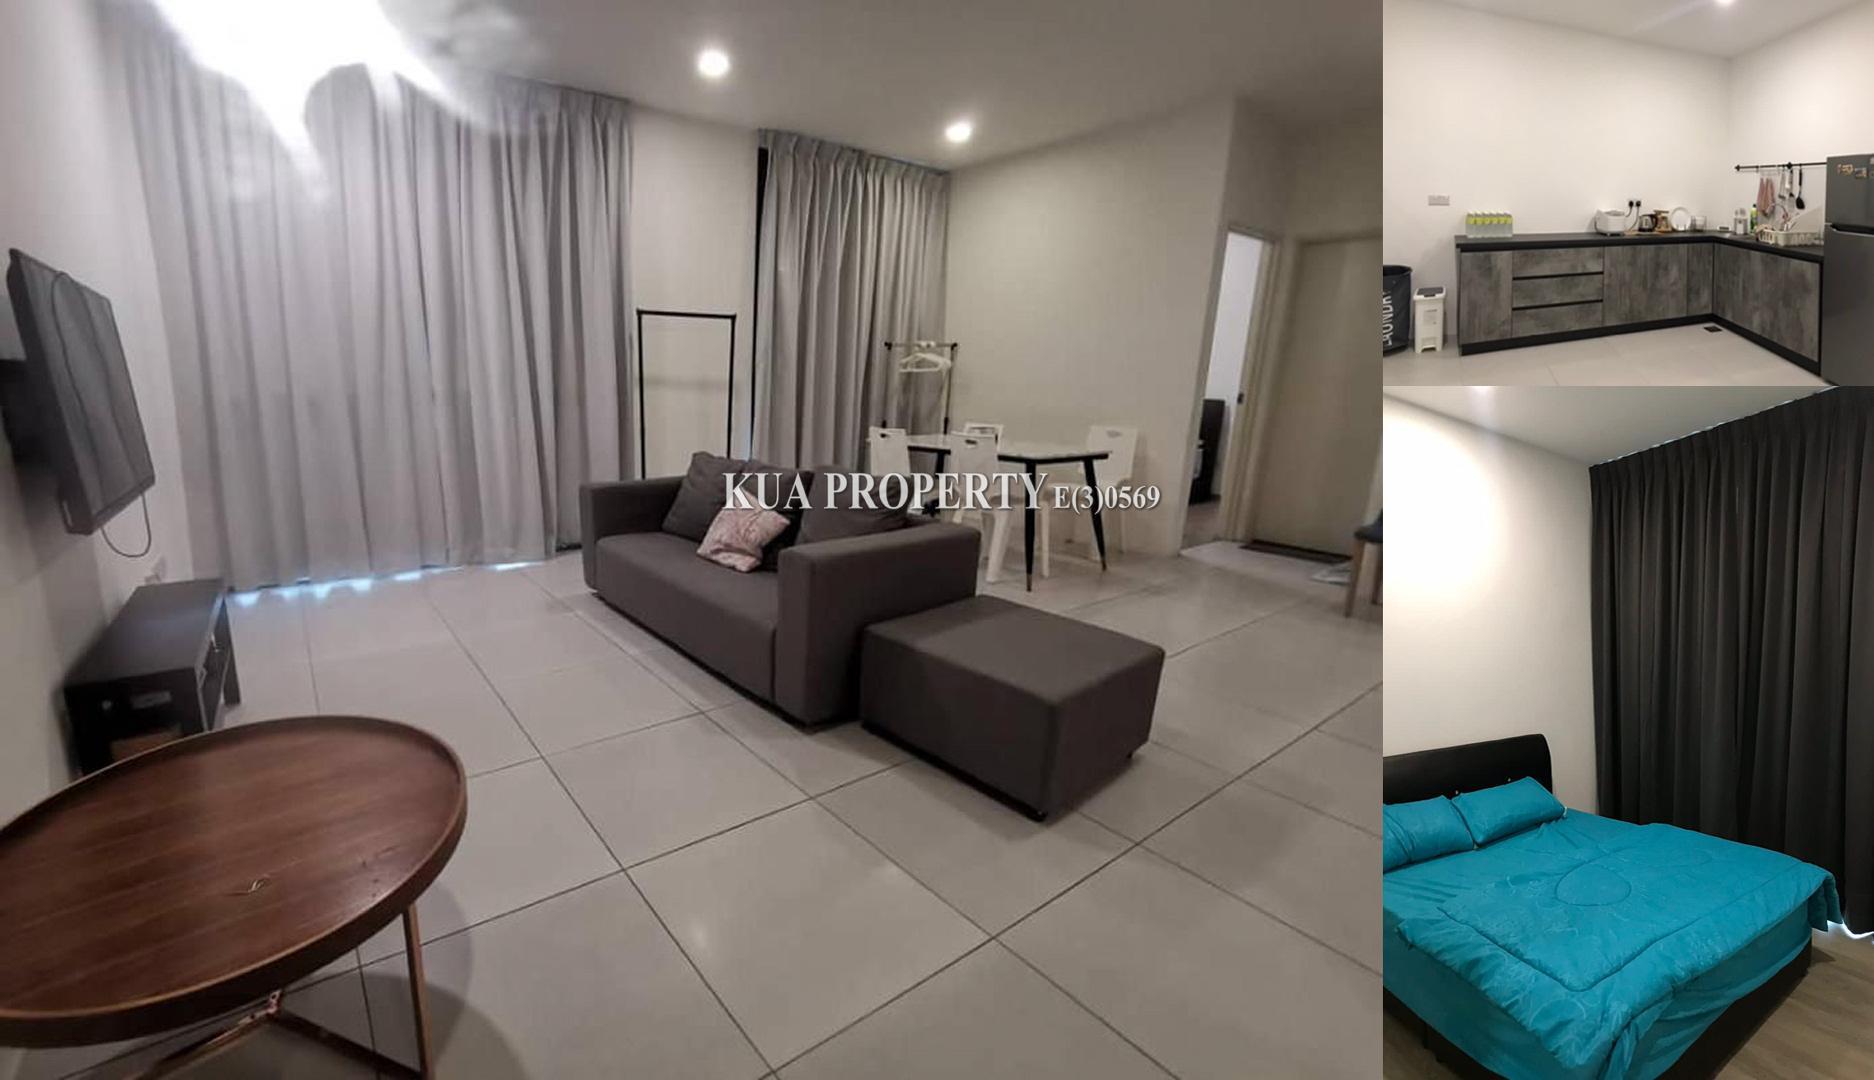 4th floor deLOFTS Residence For Rent! at Jalan Tun Jugah(opposite Premier 101)